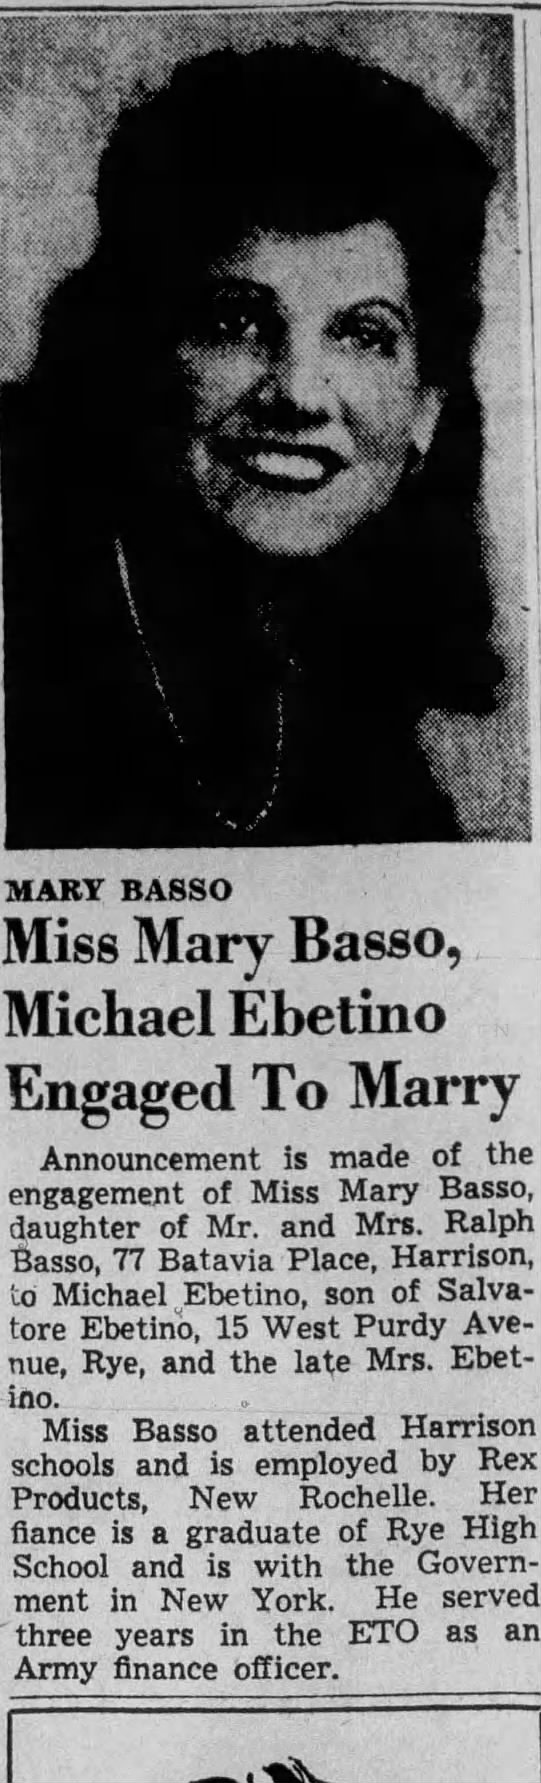 Marriage of Basso / Ebetino